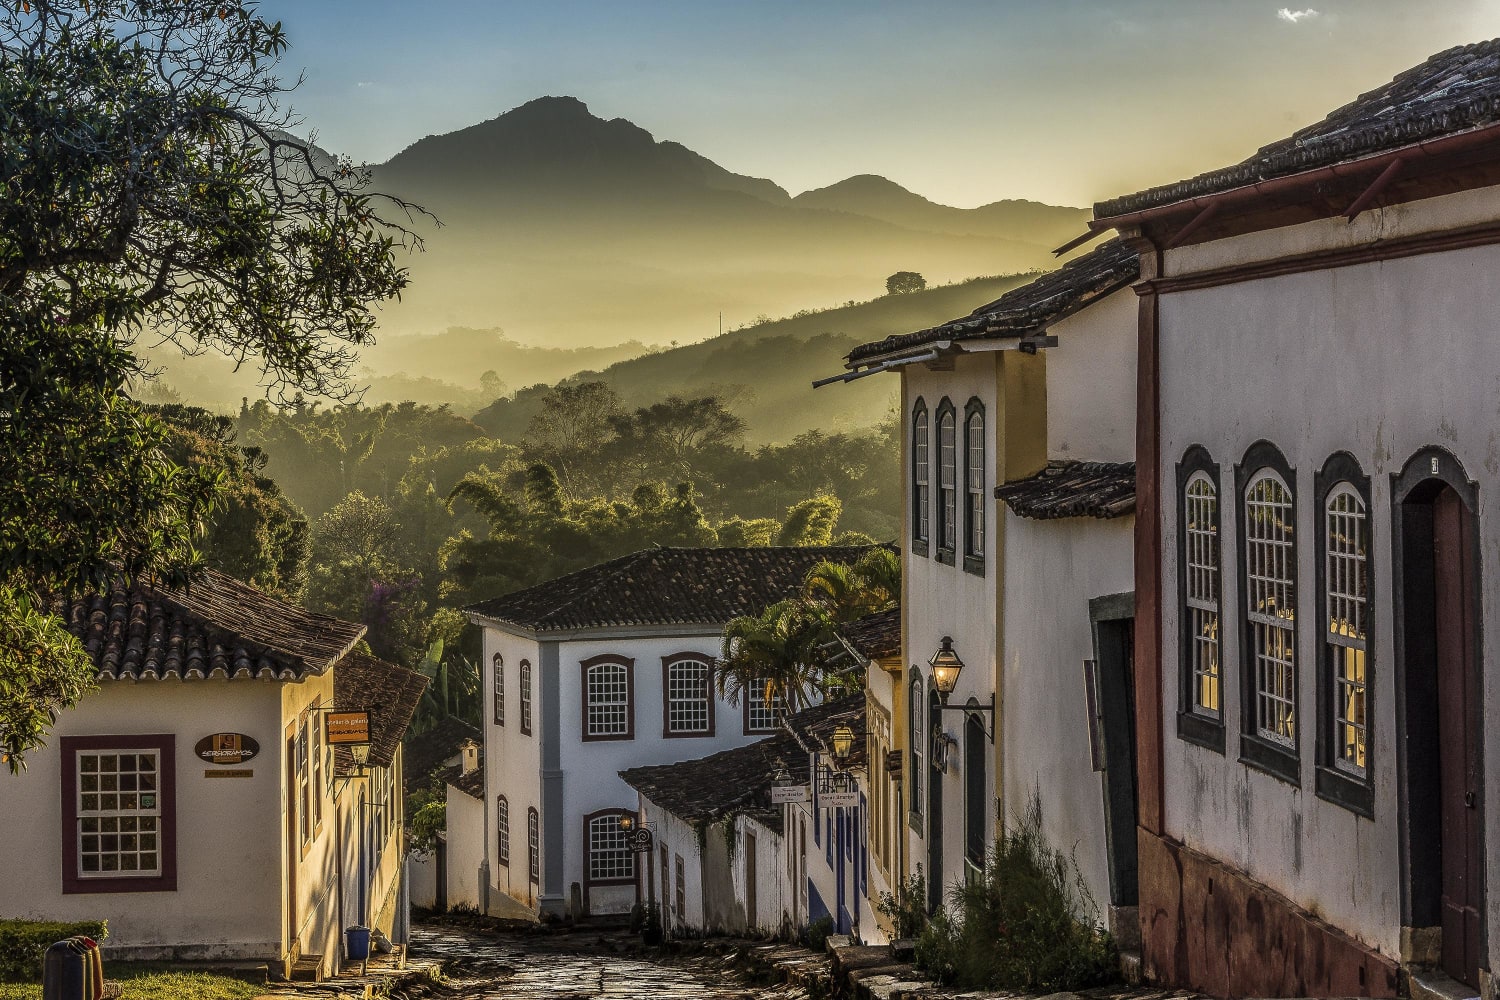 Tiradentes, Brazil